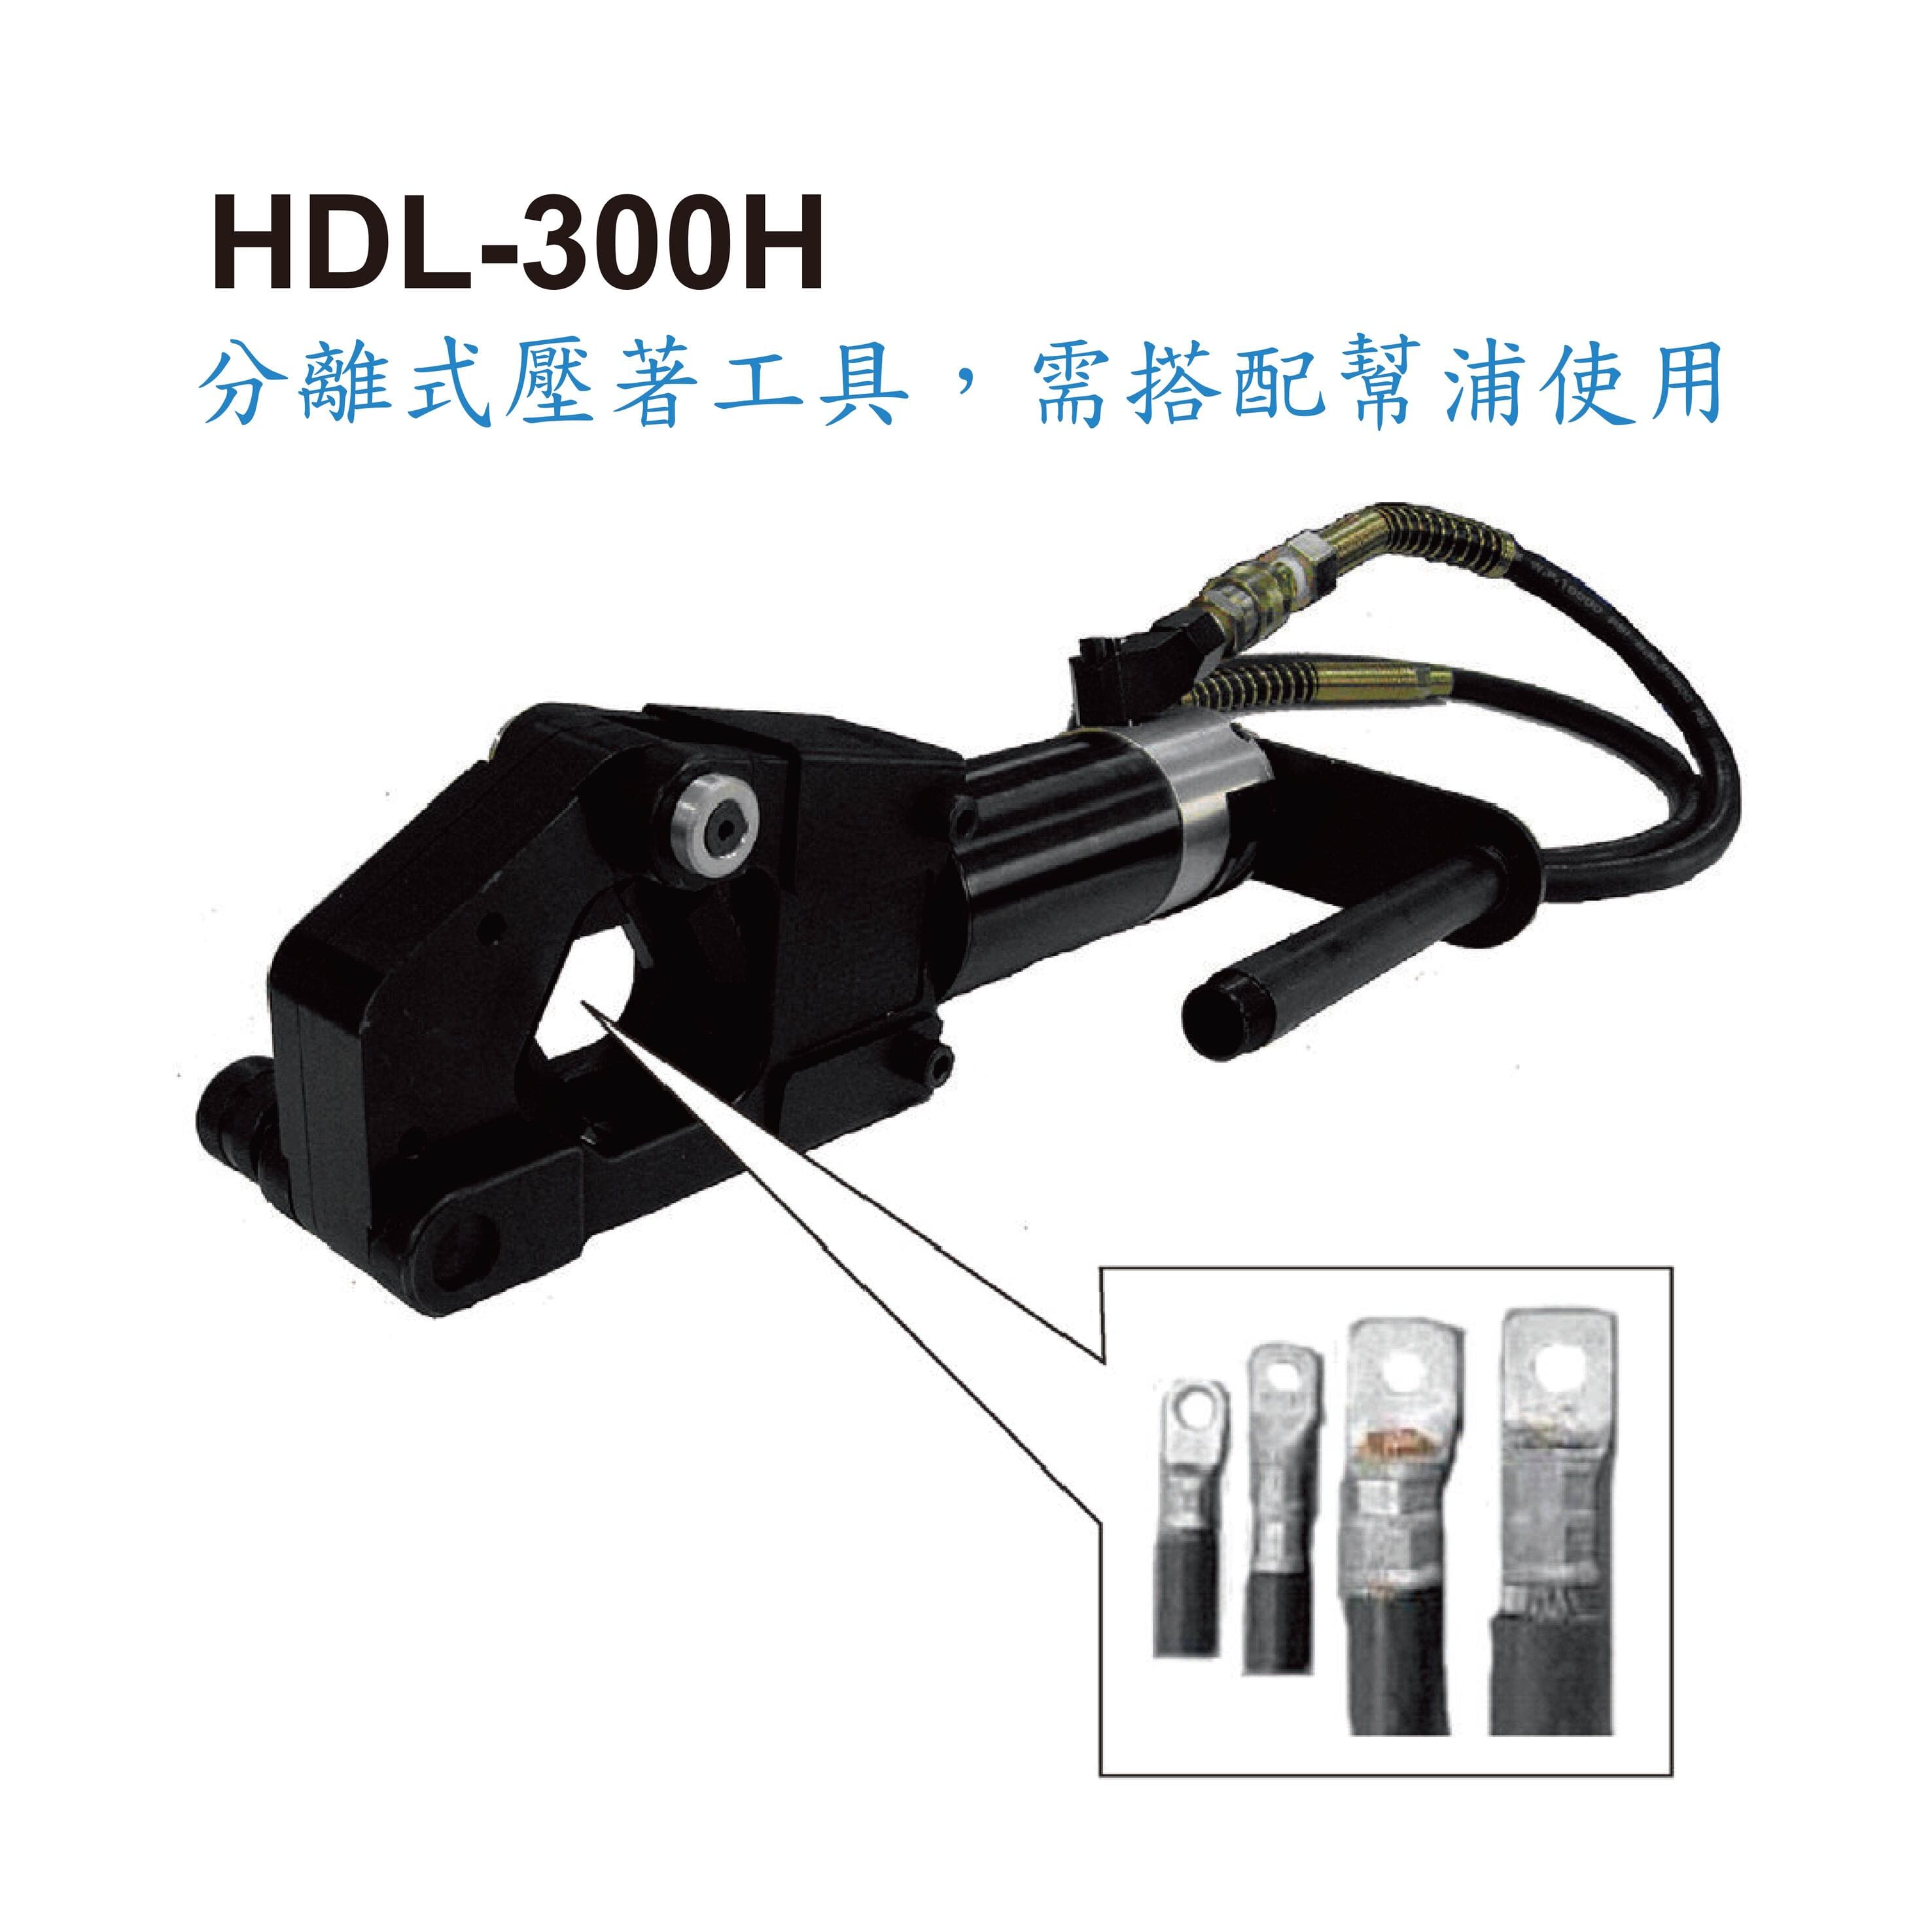 HDL-300H 免換模油壓壓接工具